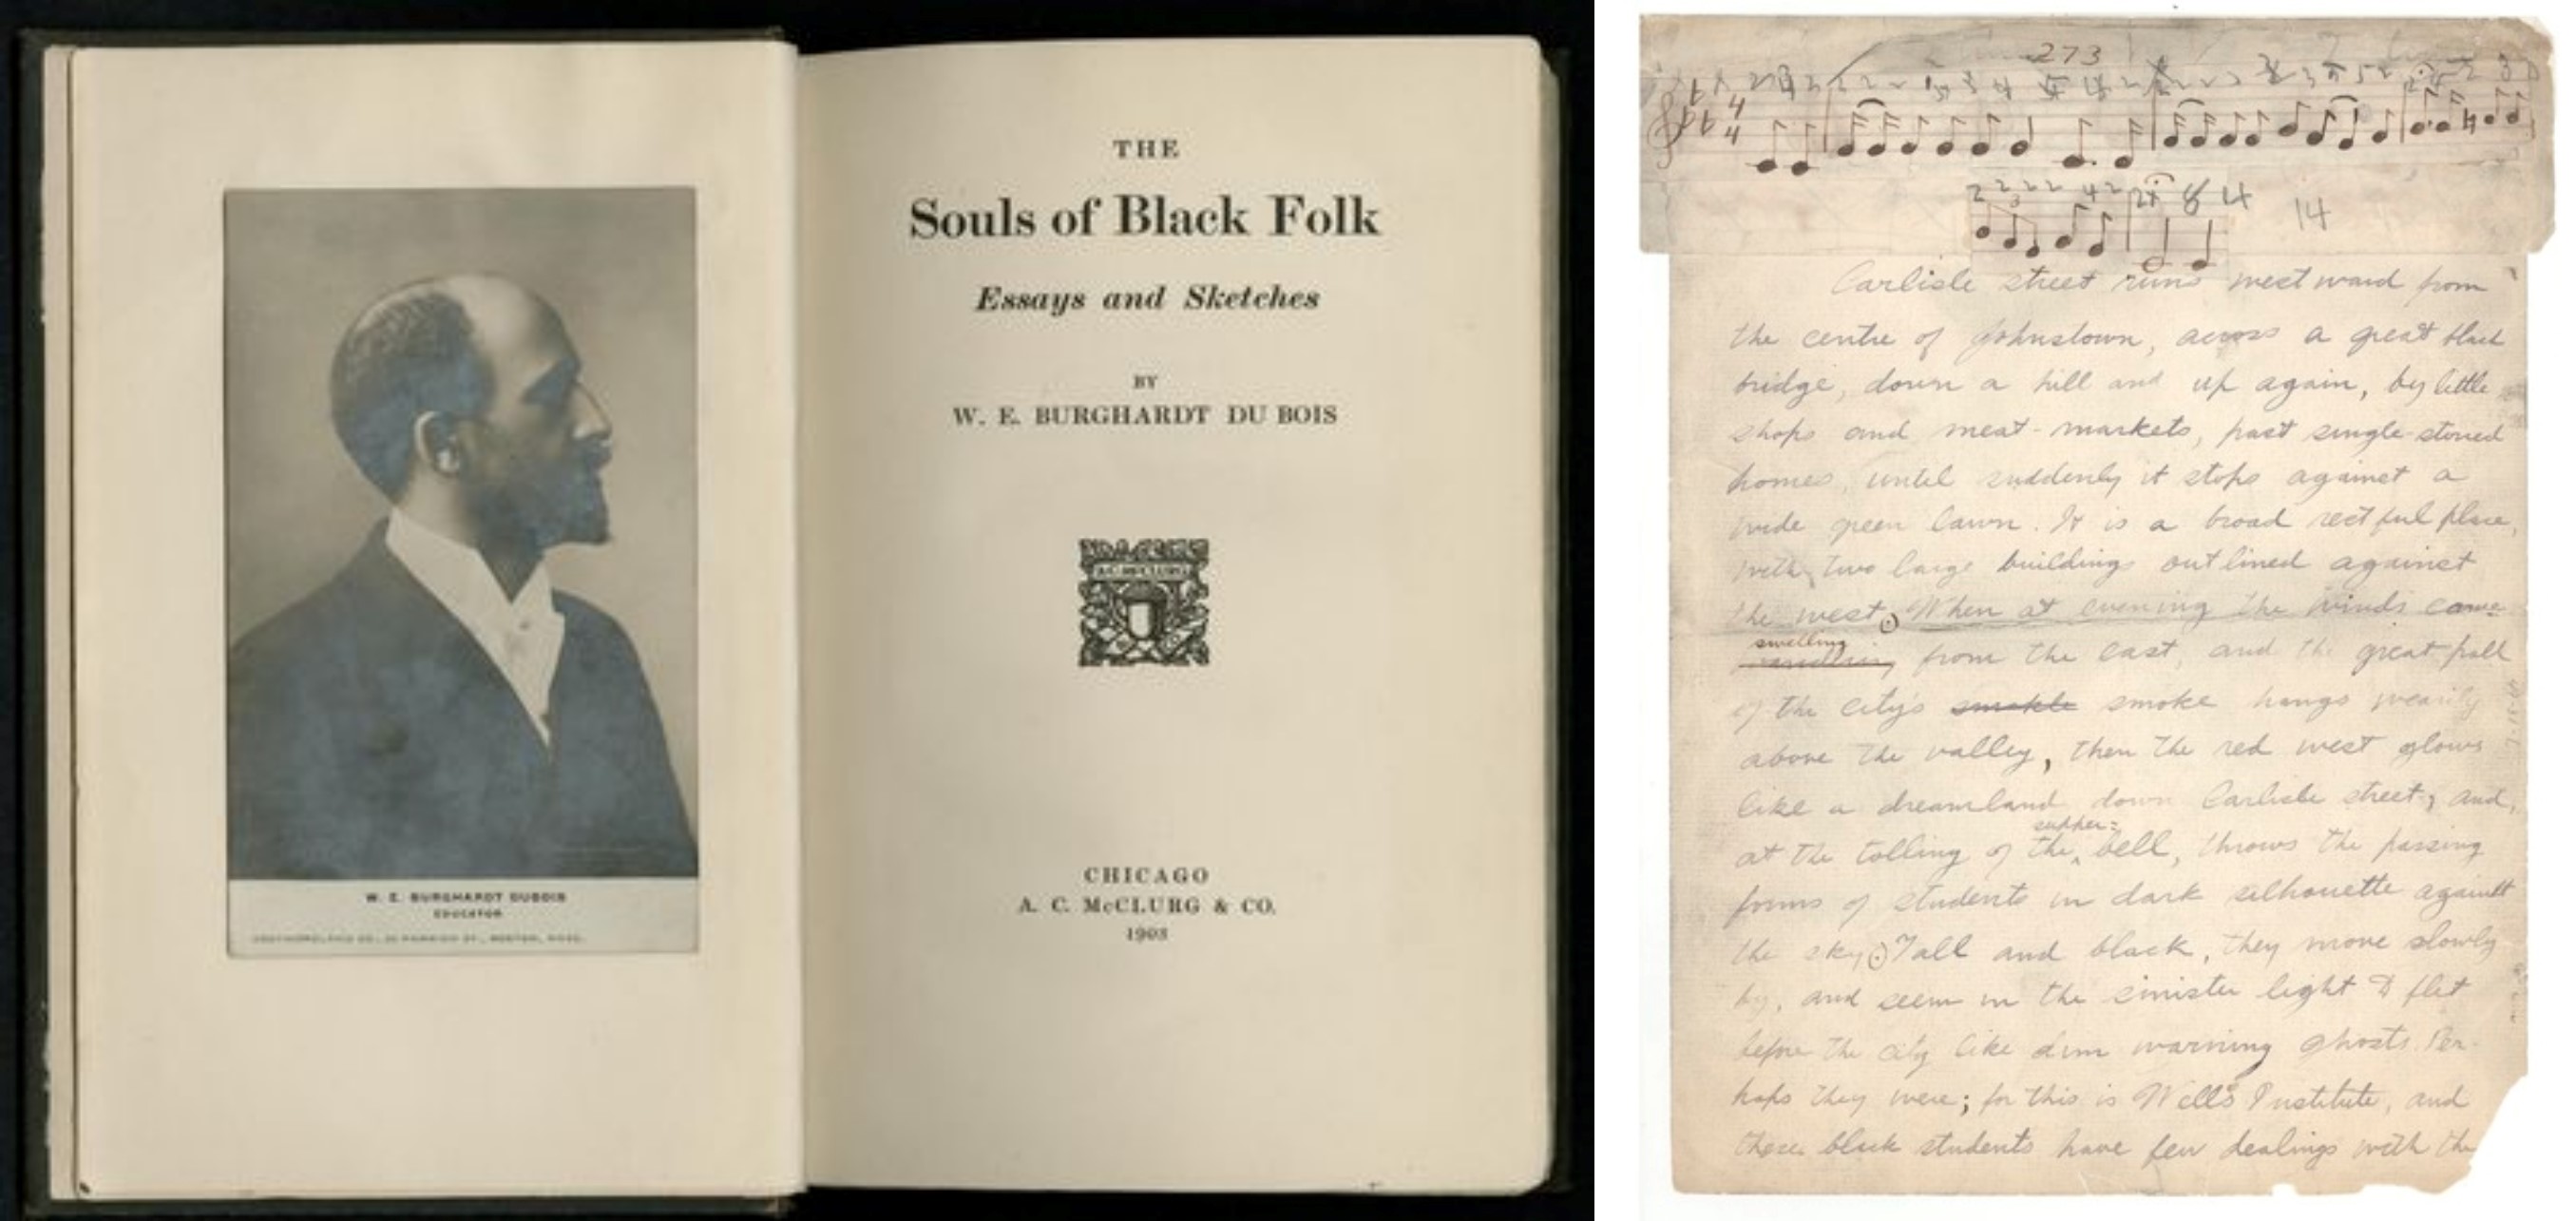 On the left, a copy of W. E. B. Du Bois' 'The Souls of Black Folk.' On the right, a handwritten draft of 'The Souls of Black Folk.'